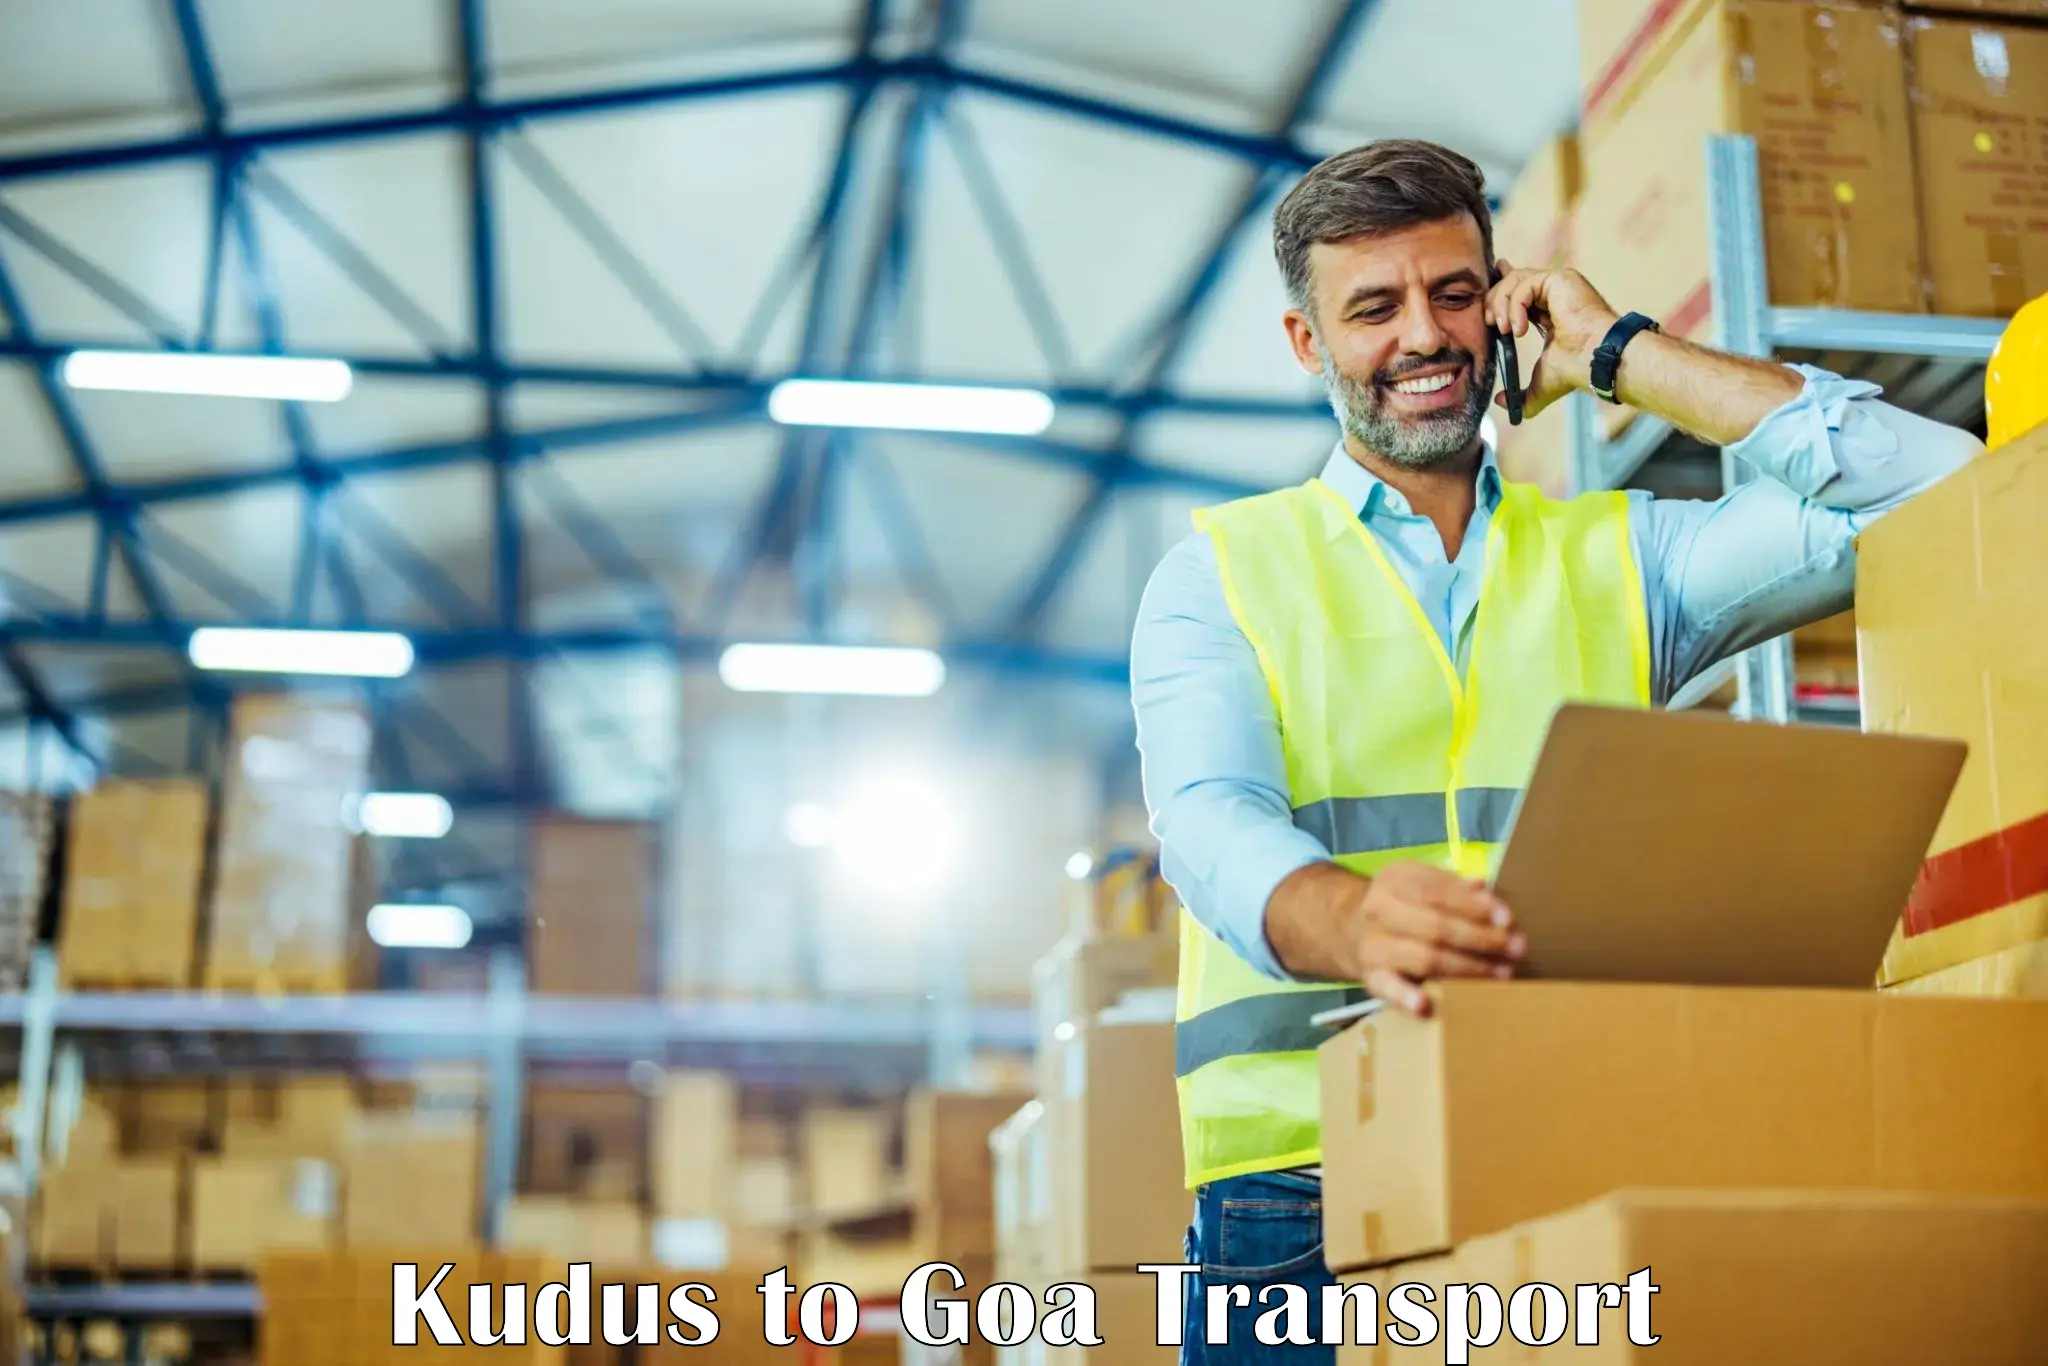 Daily transport service Kudus to Goa